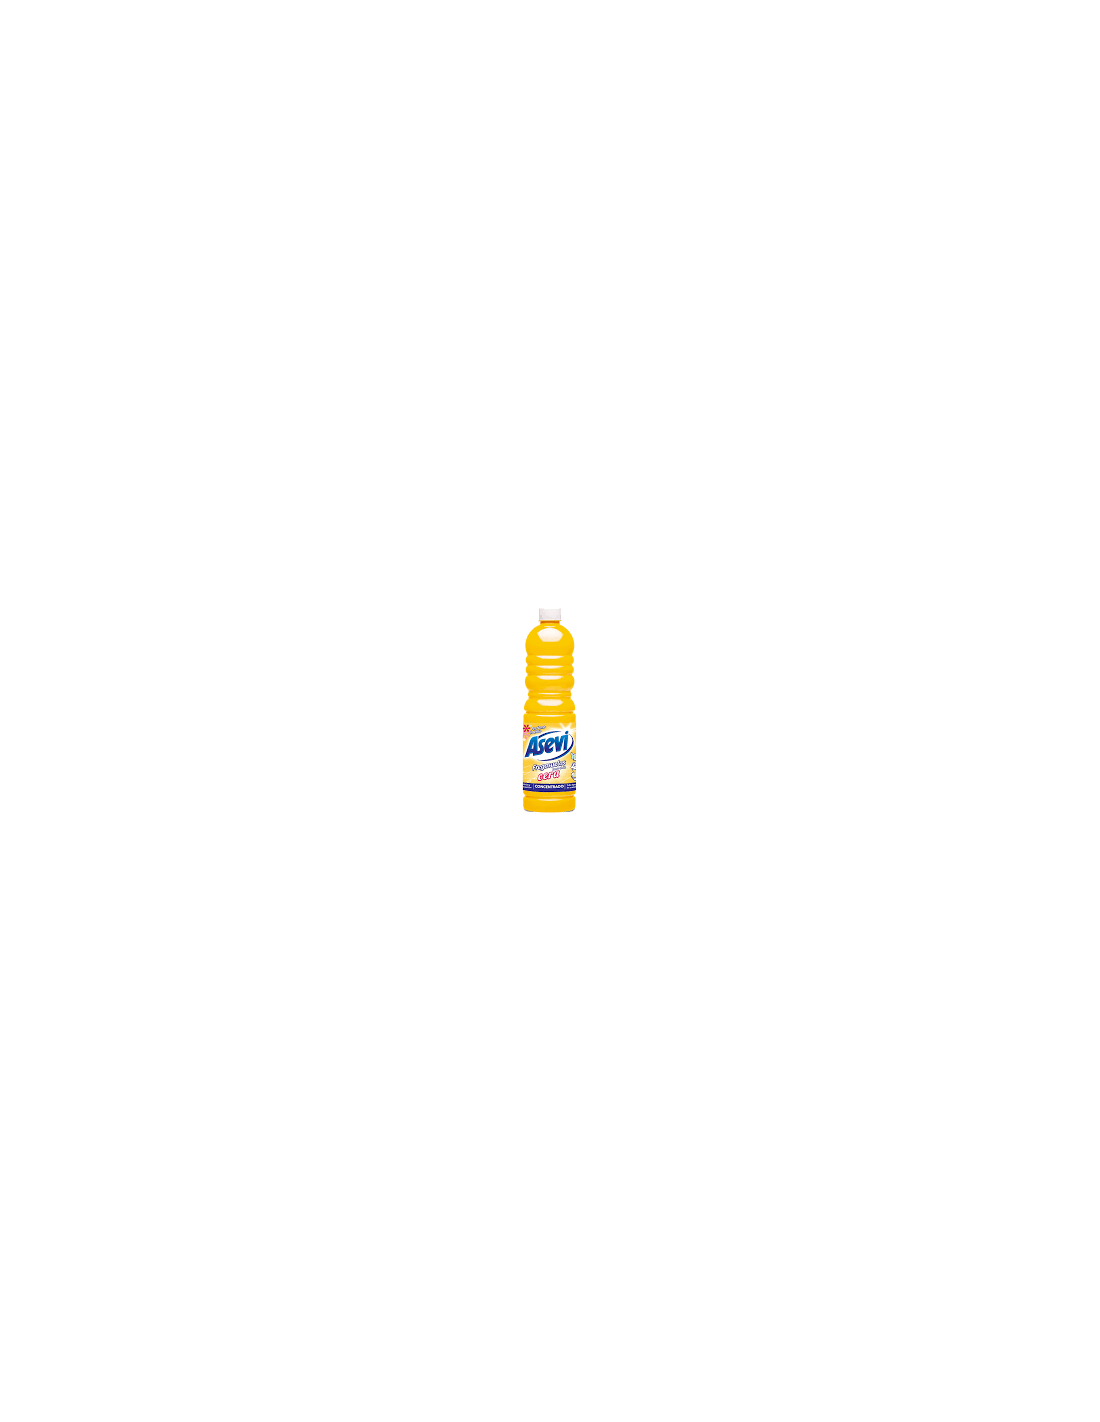  Asevi Cera 1 Litro (22241), amarillo : Salud y Hogar